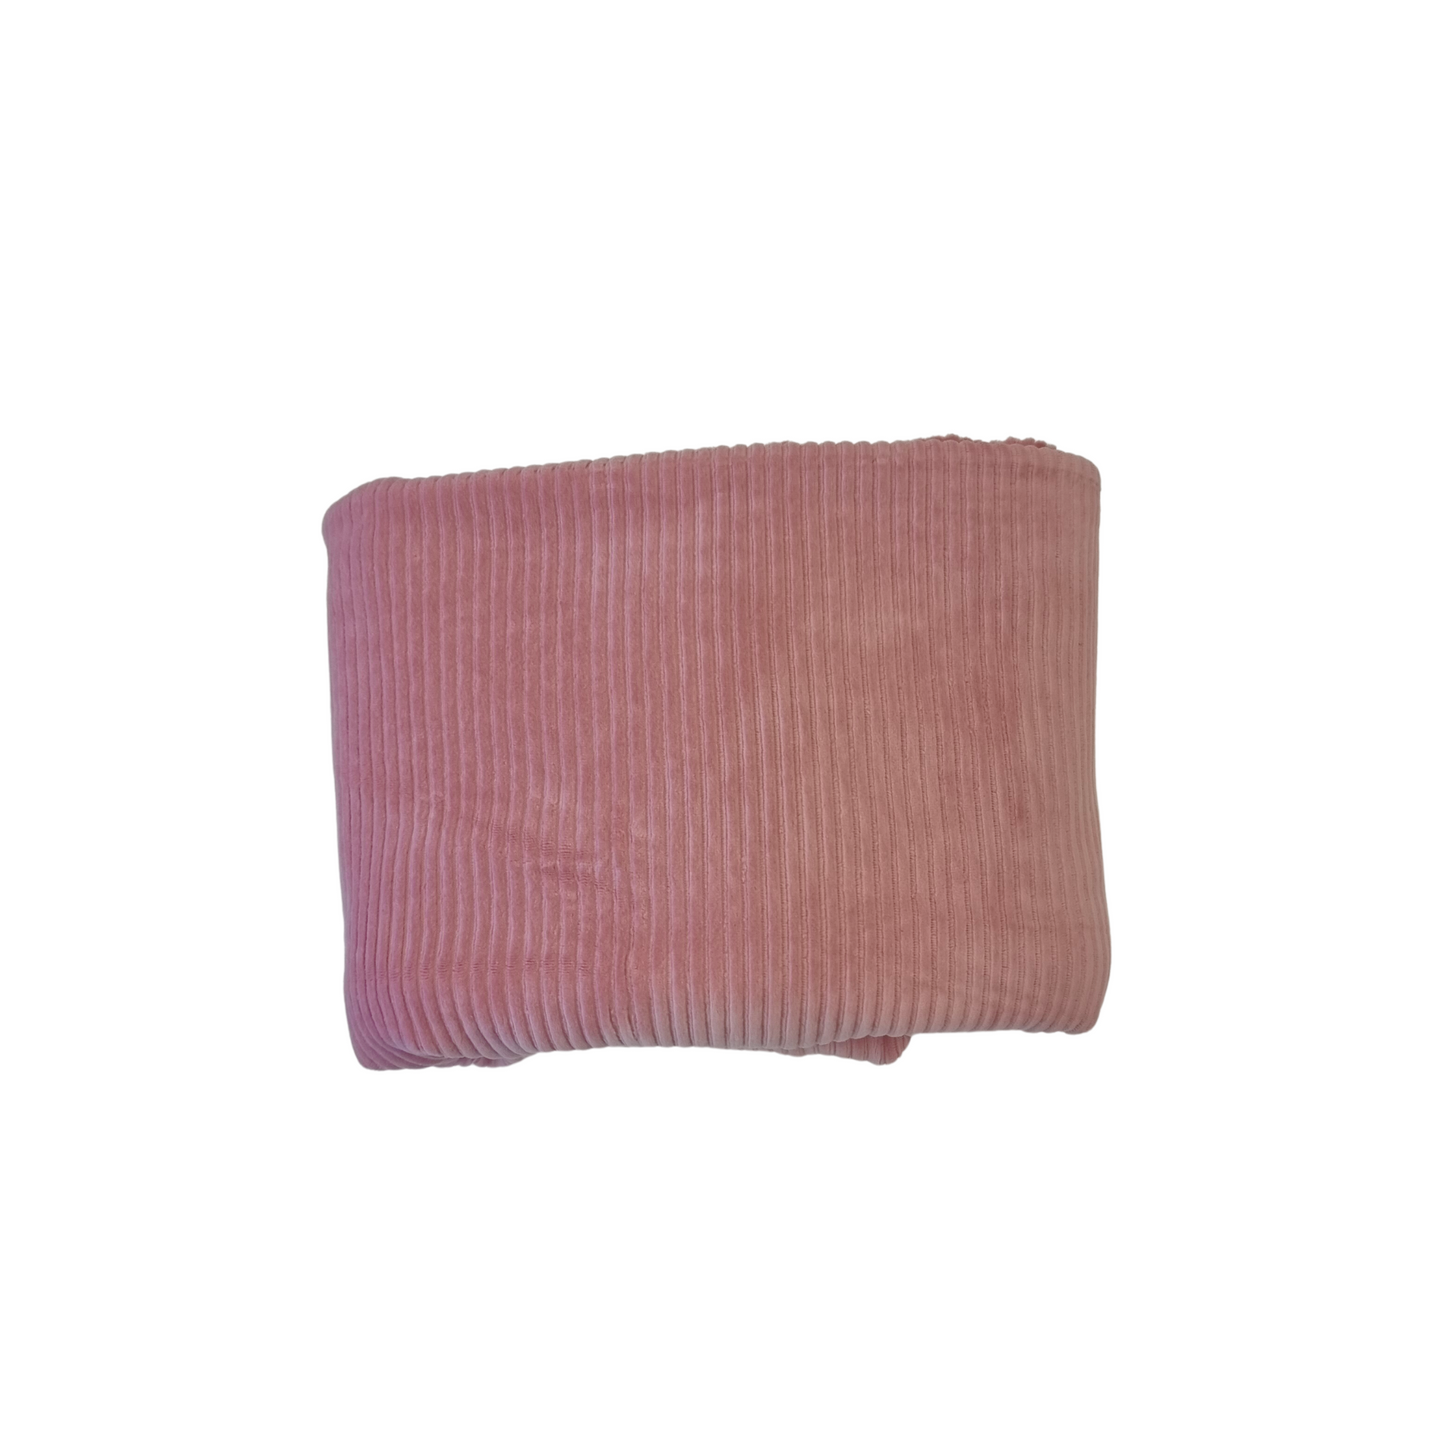 156 cm x 160 cm | Pink Stretch Jersey Cord